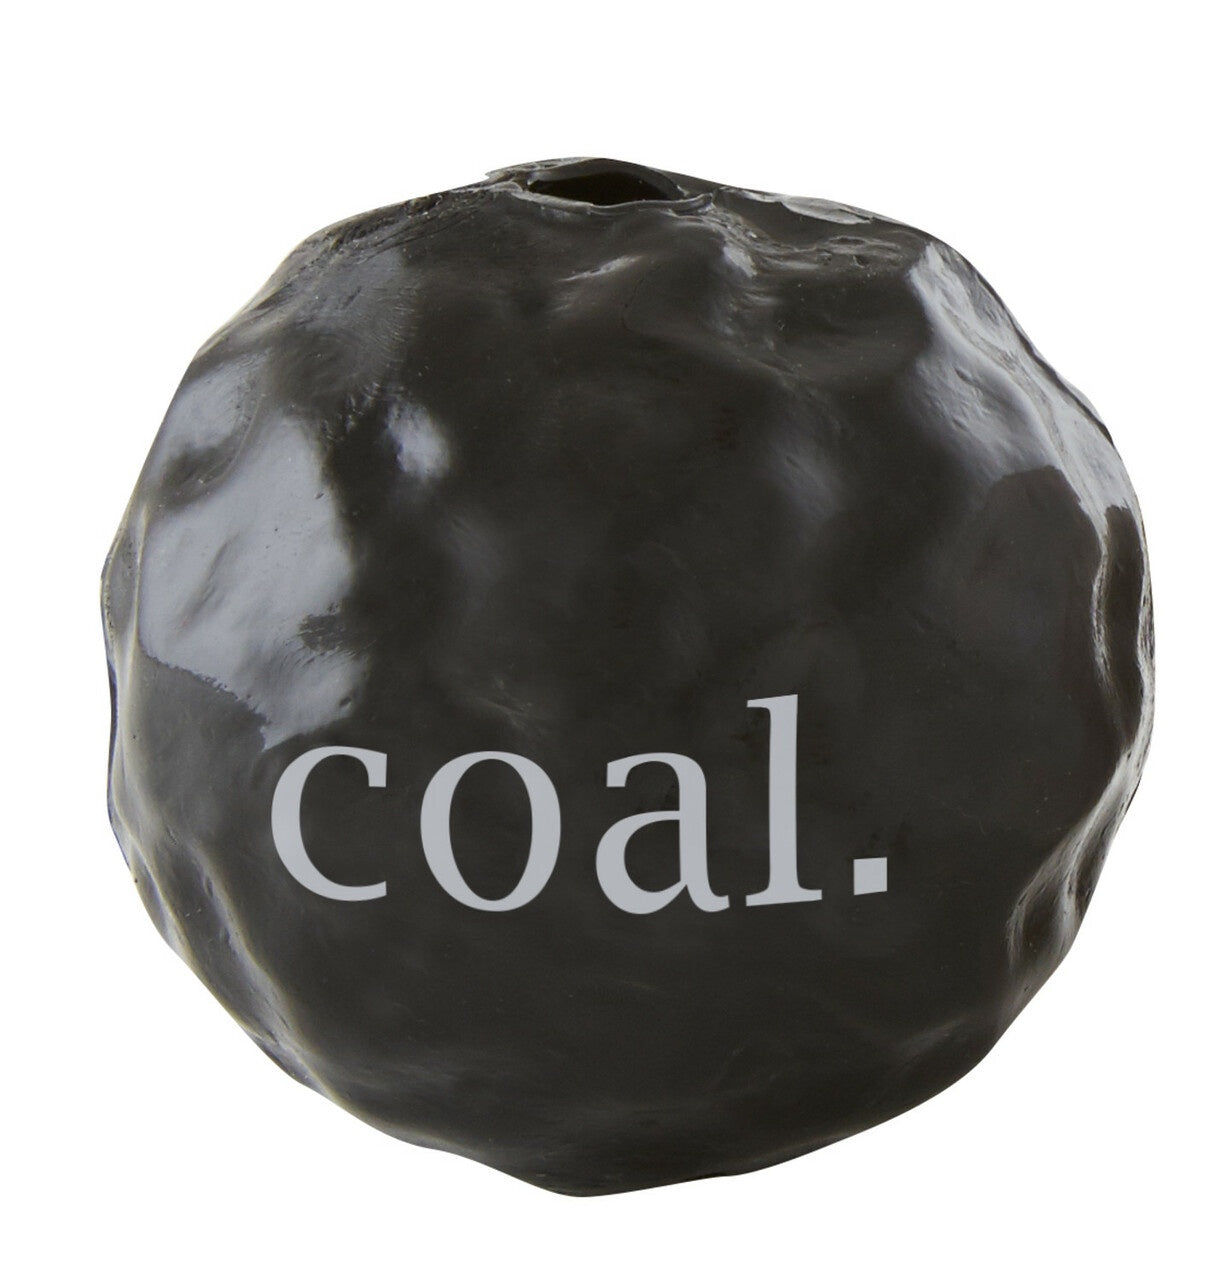 Outward Hound Planet Dog Lump of Coal